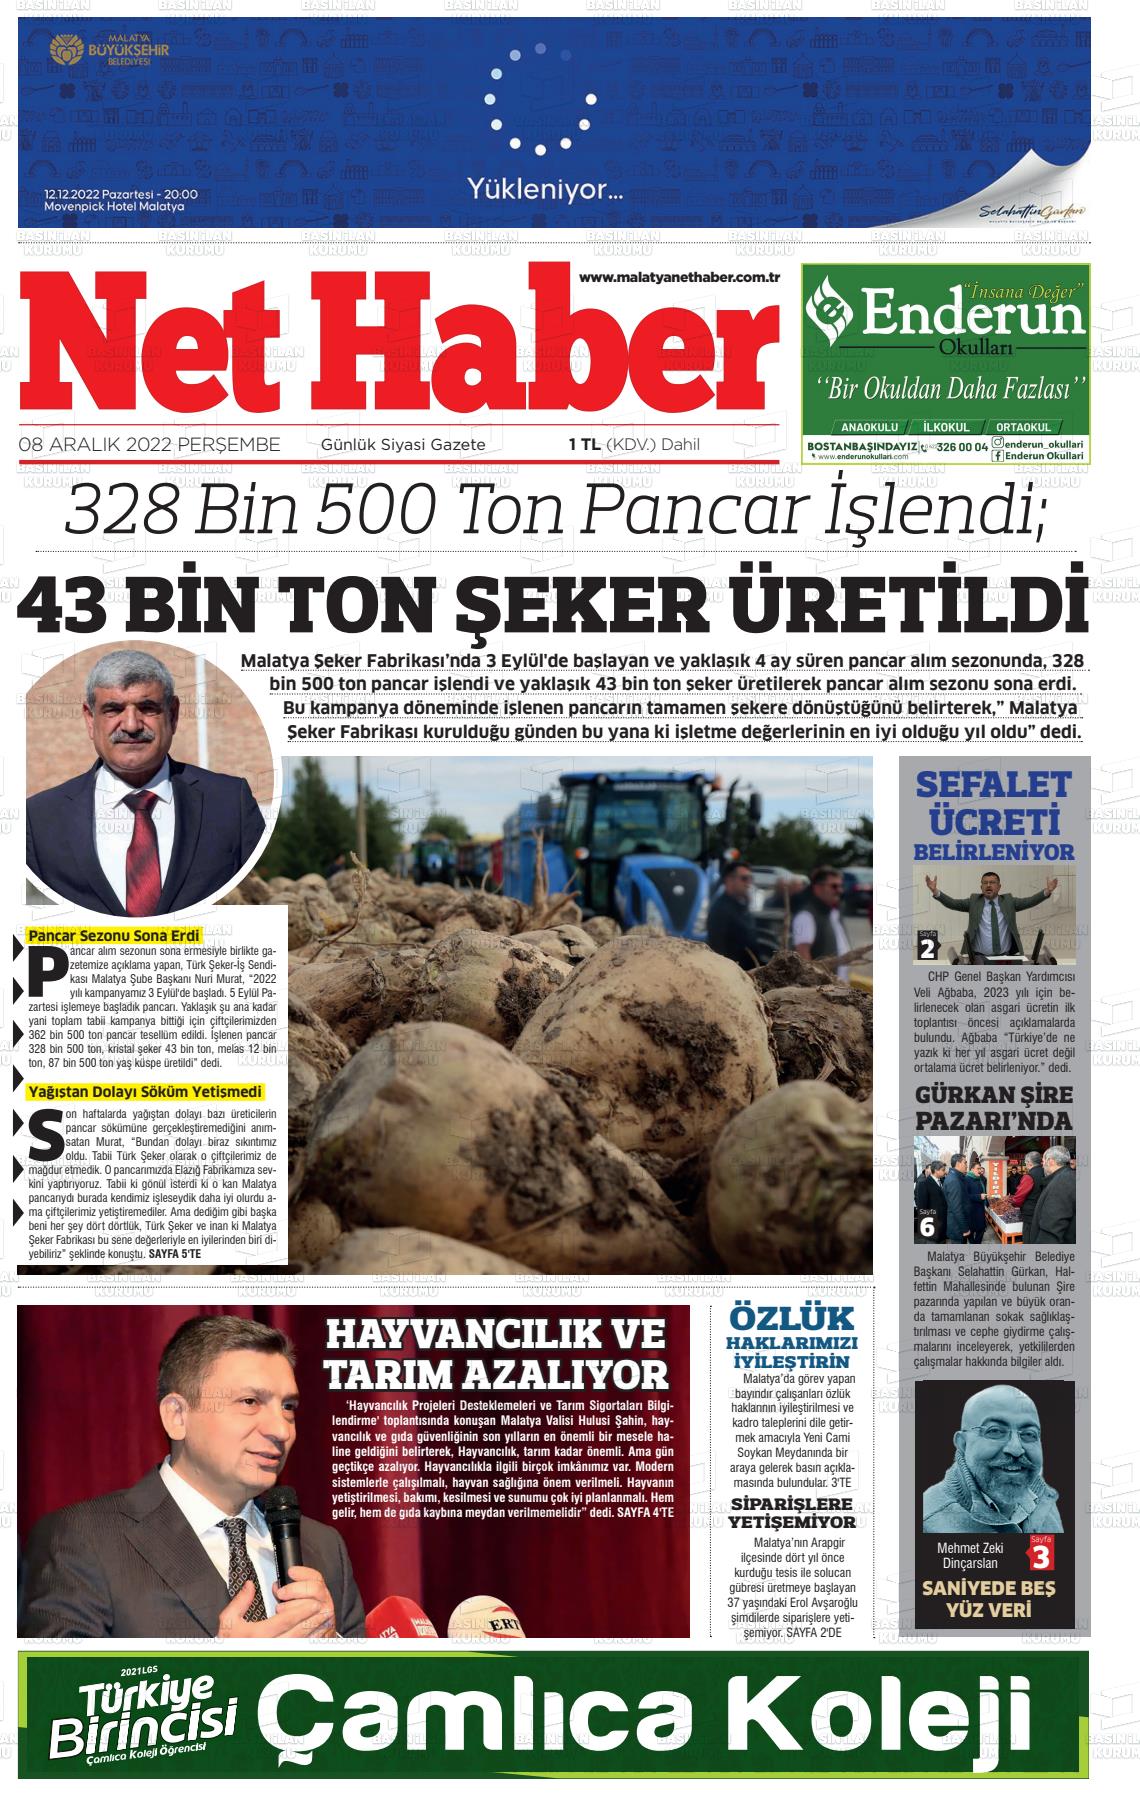 08 Aralık 2022 MALATYA NET HABER Gazete Manşeti